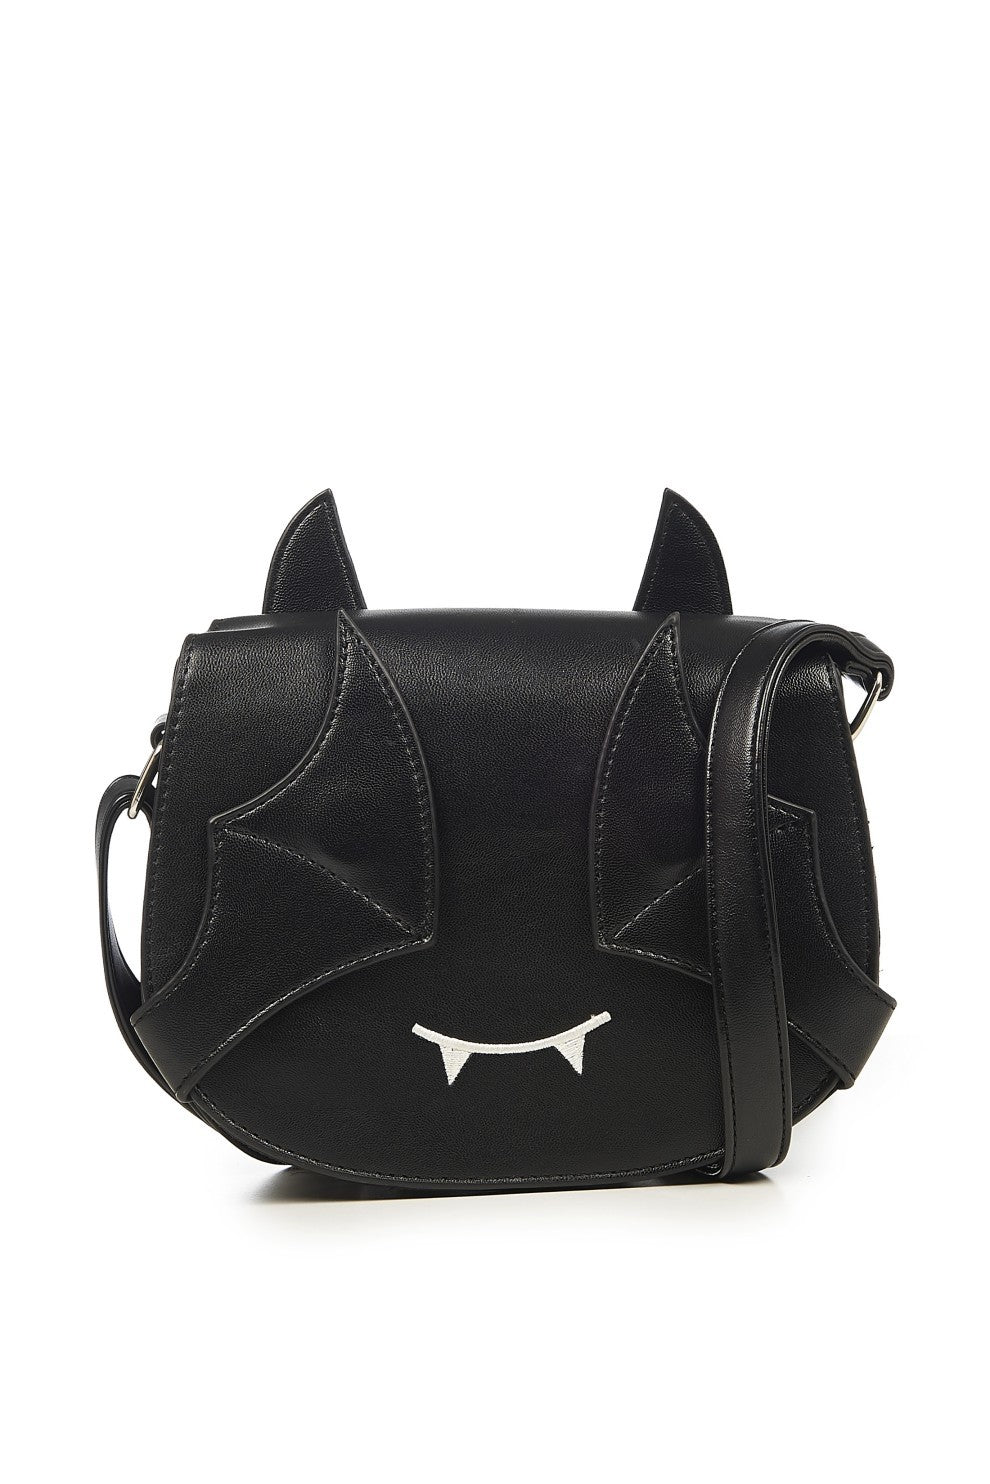 Banned Release the Bats Handbag